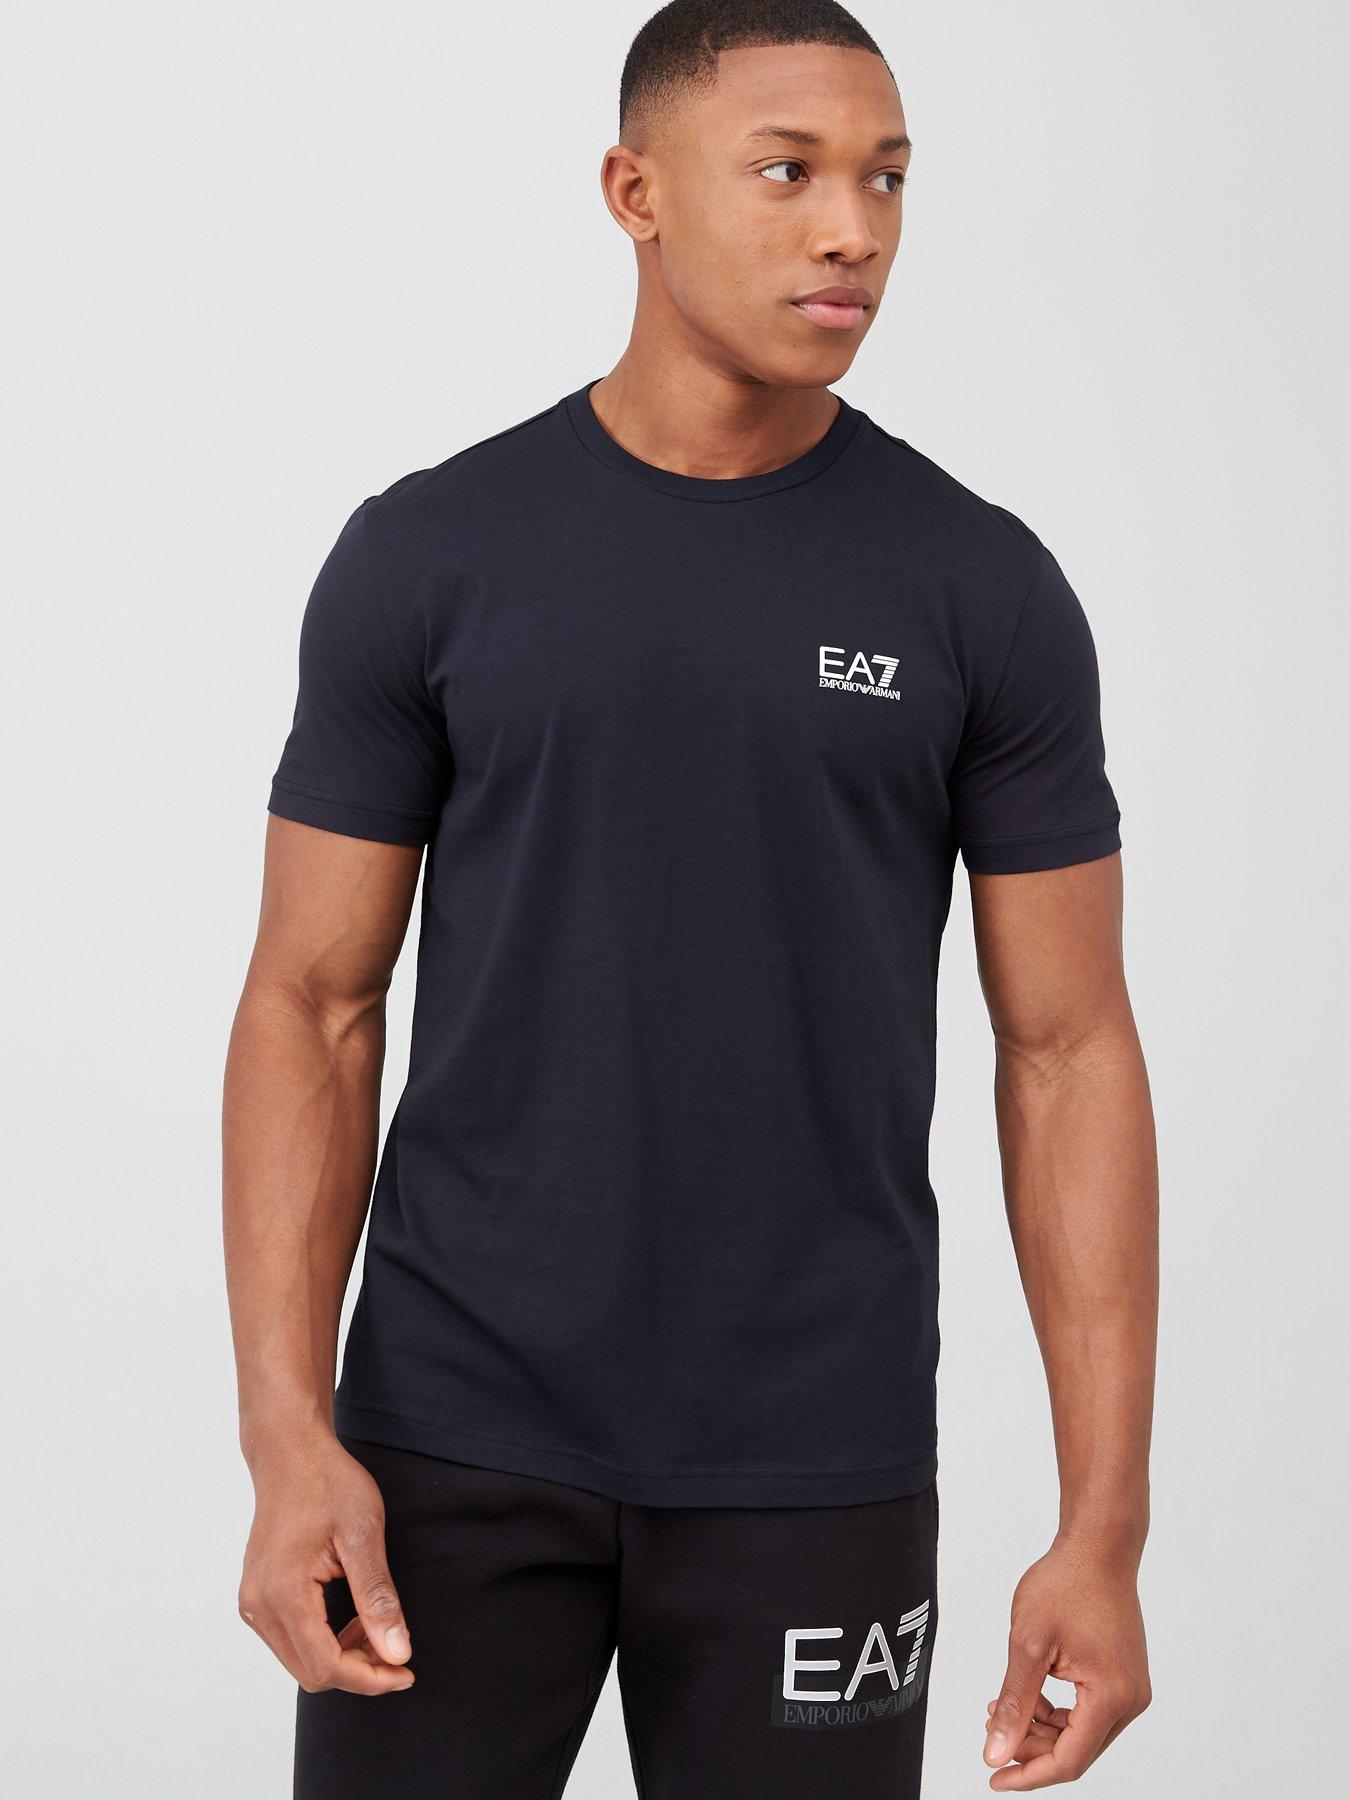 EA7 Emporio Armani Core ID Logo T-Shirt - Black 